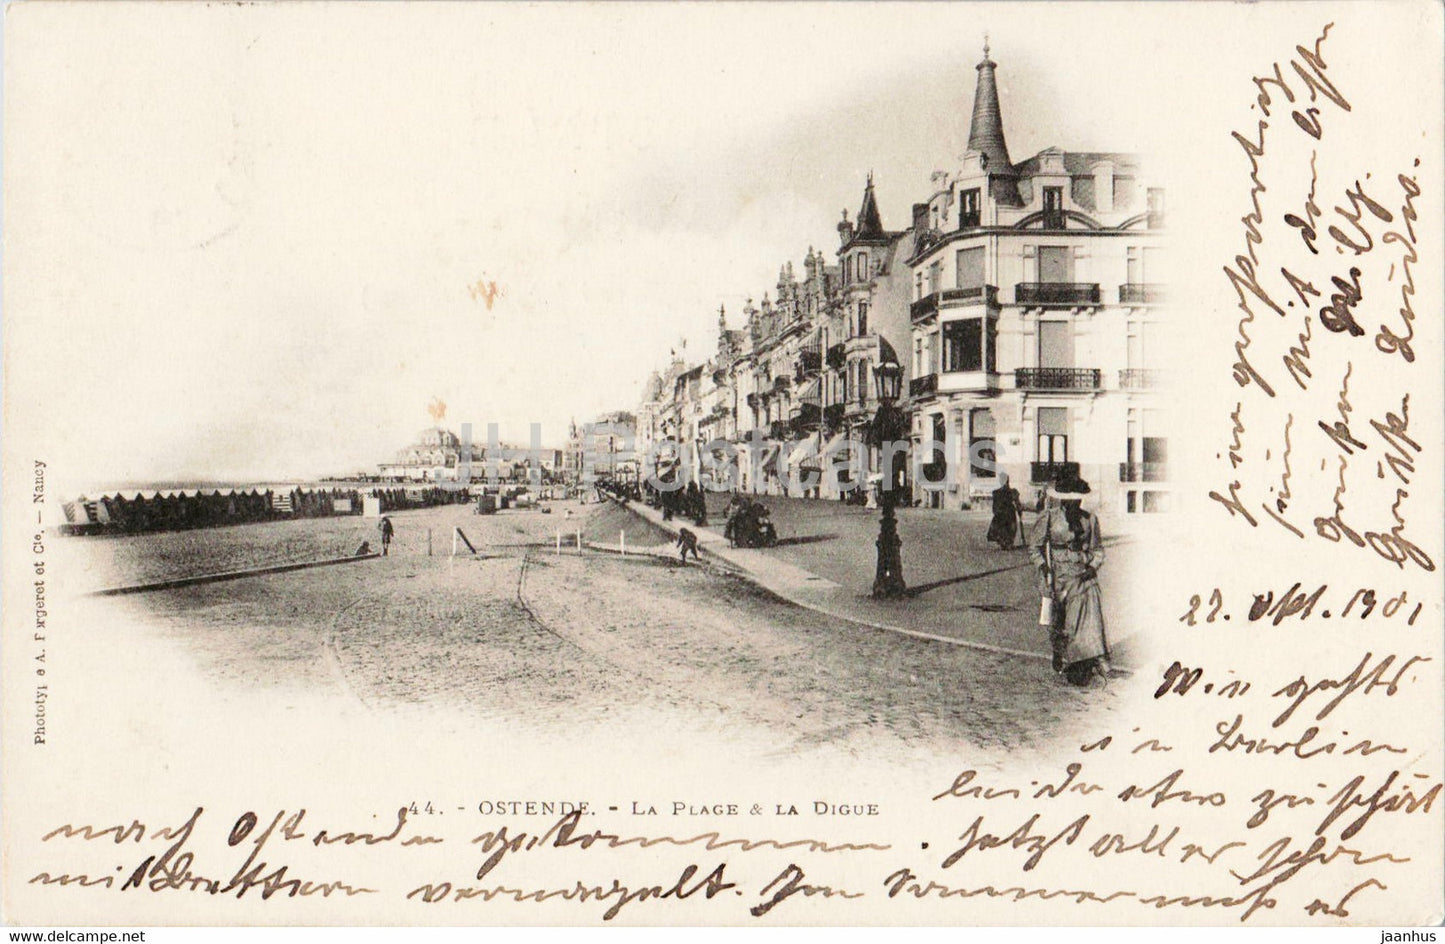 Ostende - Oostende - La Plage & La Digue - 44 - old postcard - 1901 - Belgium - used - JH Postcards